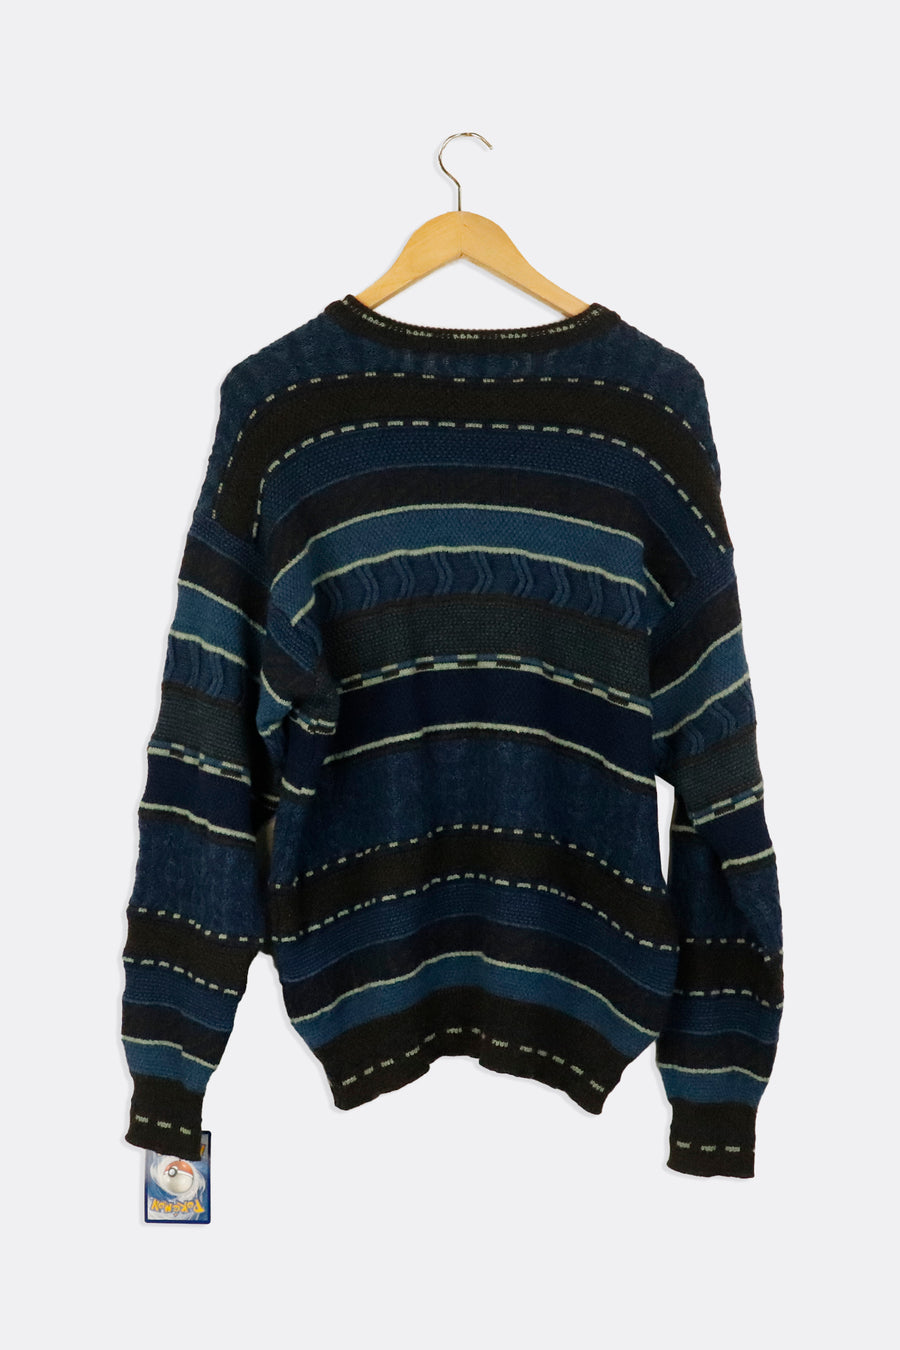 Vintage Lacoste Knit Pullover Patterned Sweatshirt